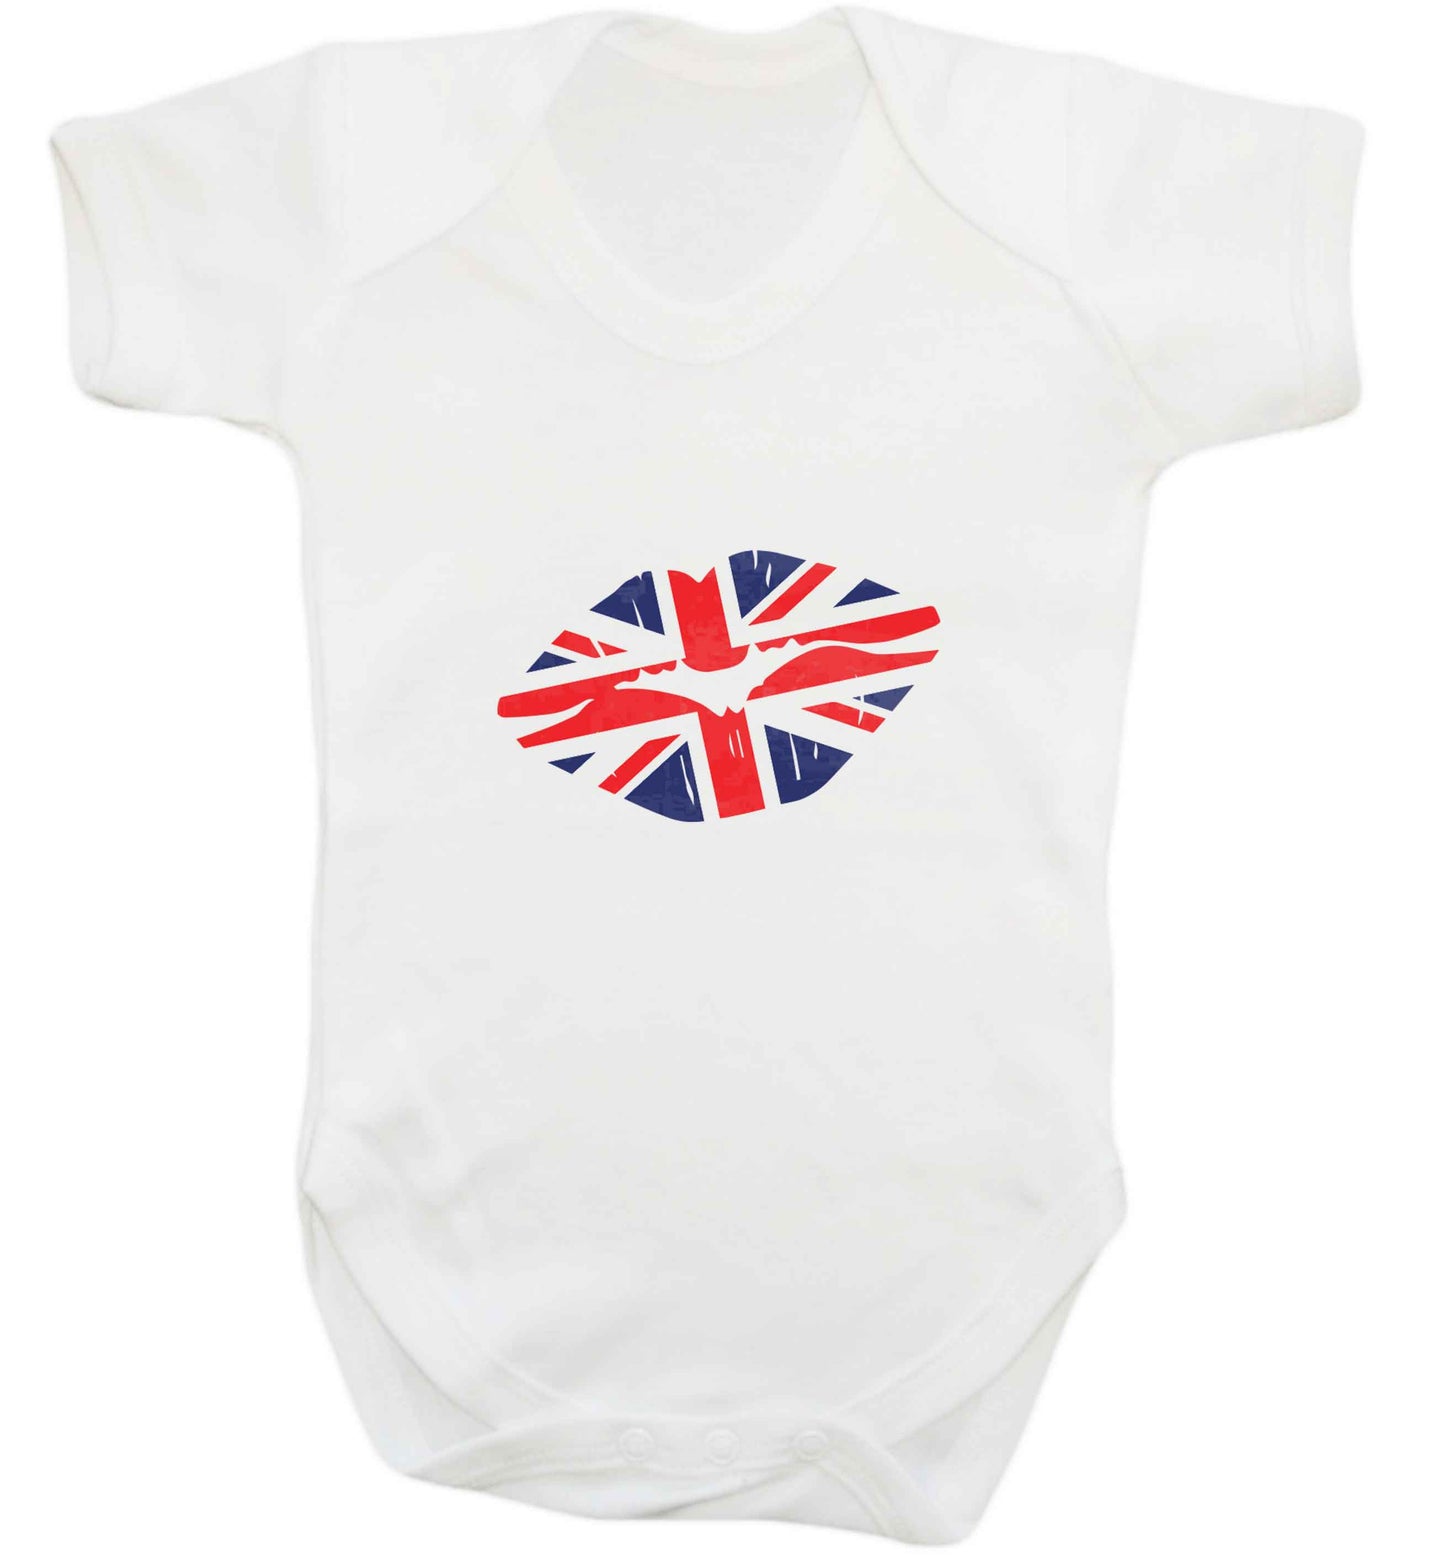 British flag kiss baby vest white 18-24 months